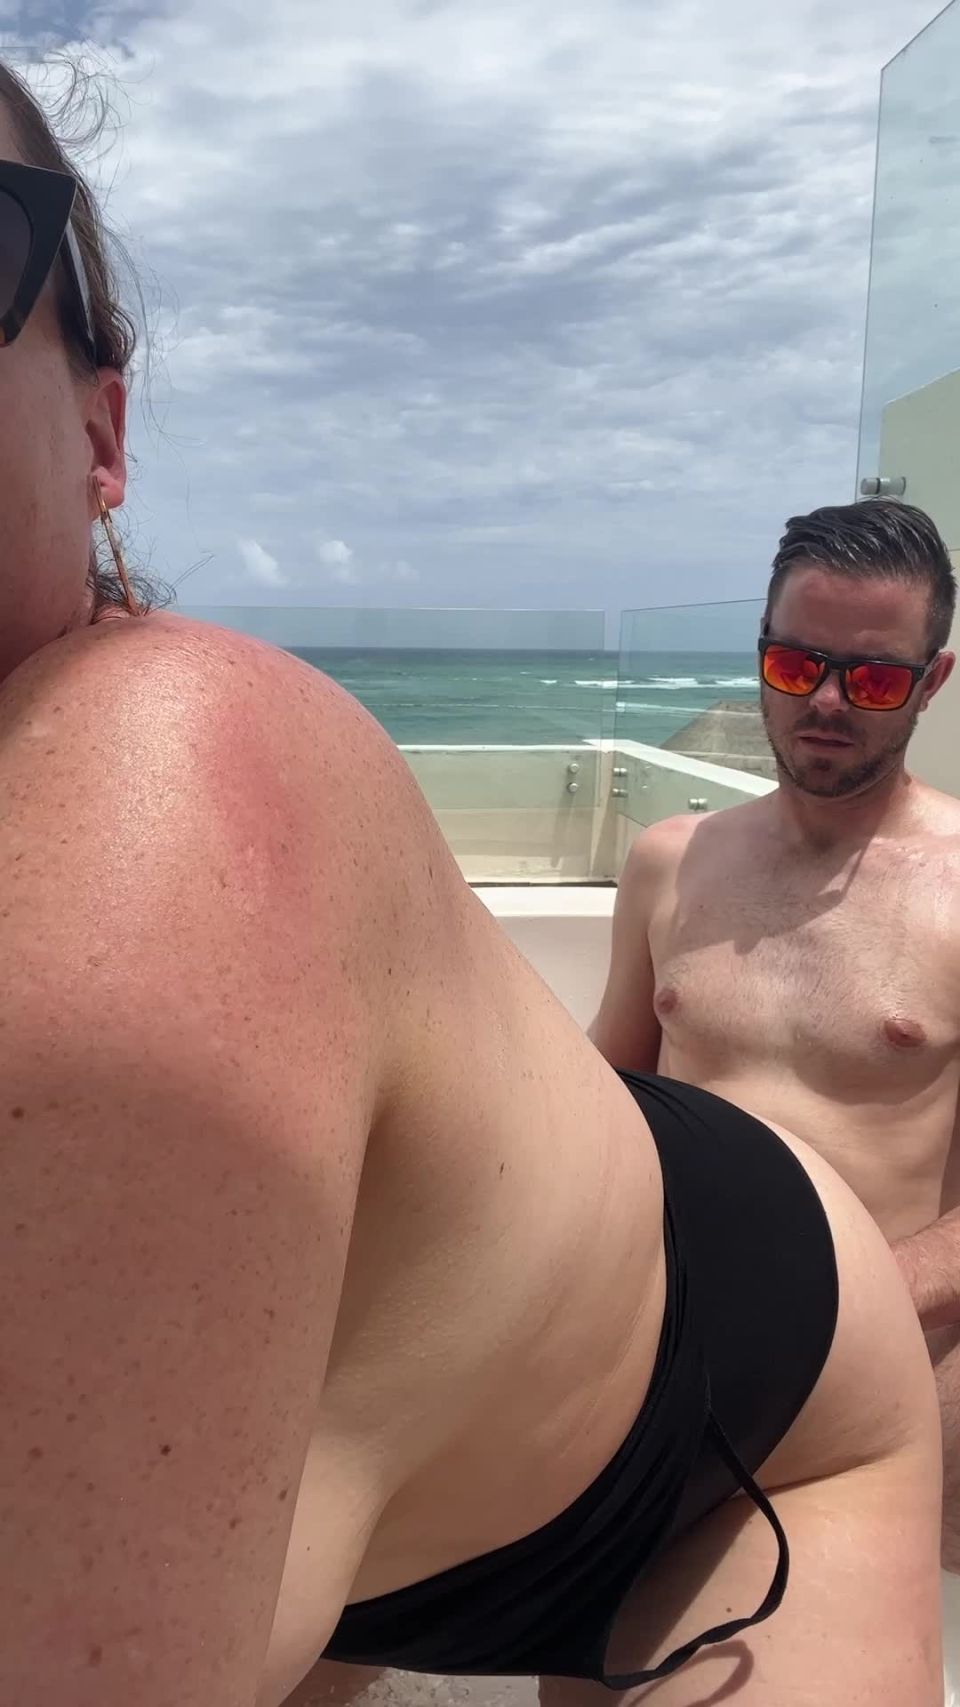 PilatesMilf - Having Hot Sex in our Private Pool in Cancun - Beach